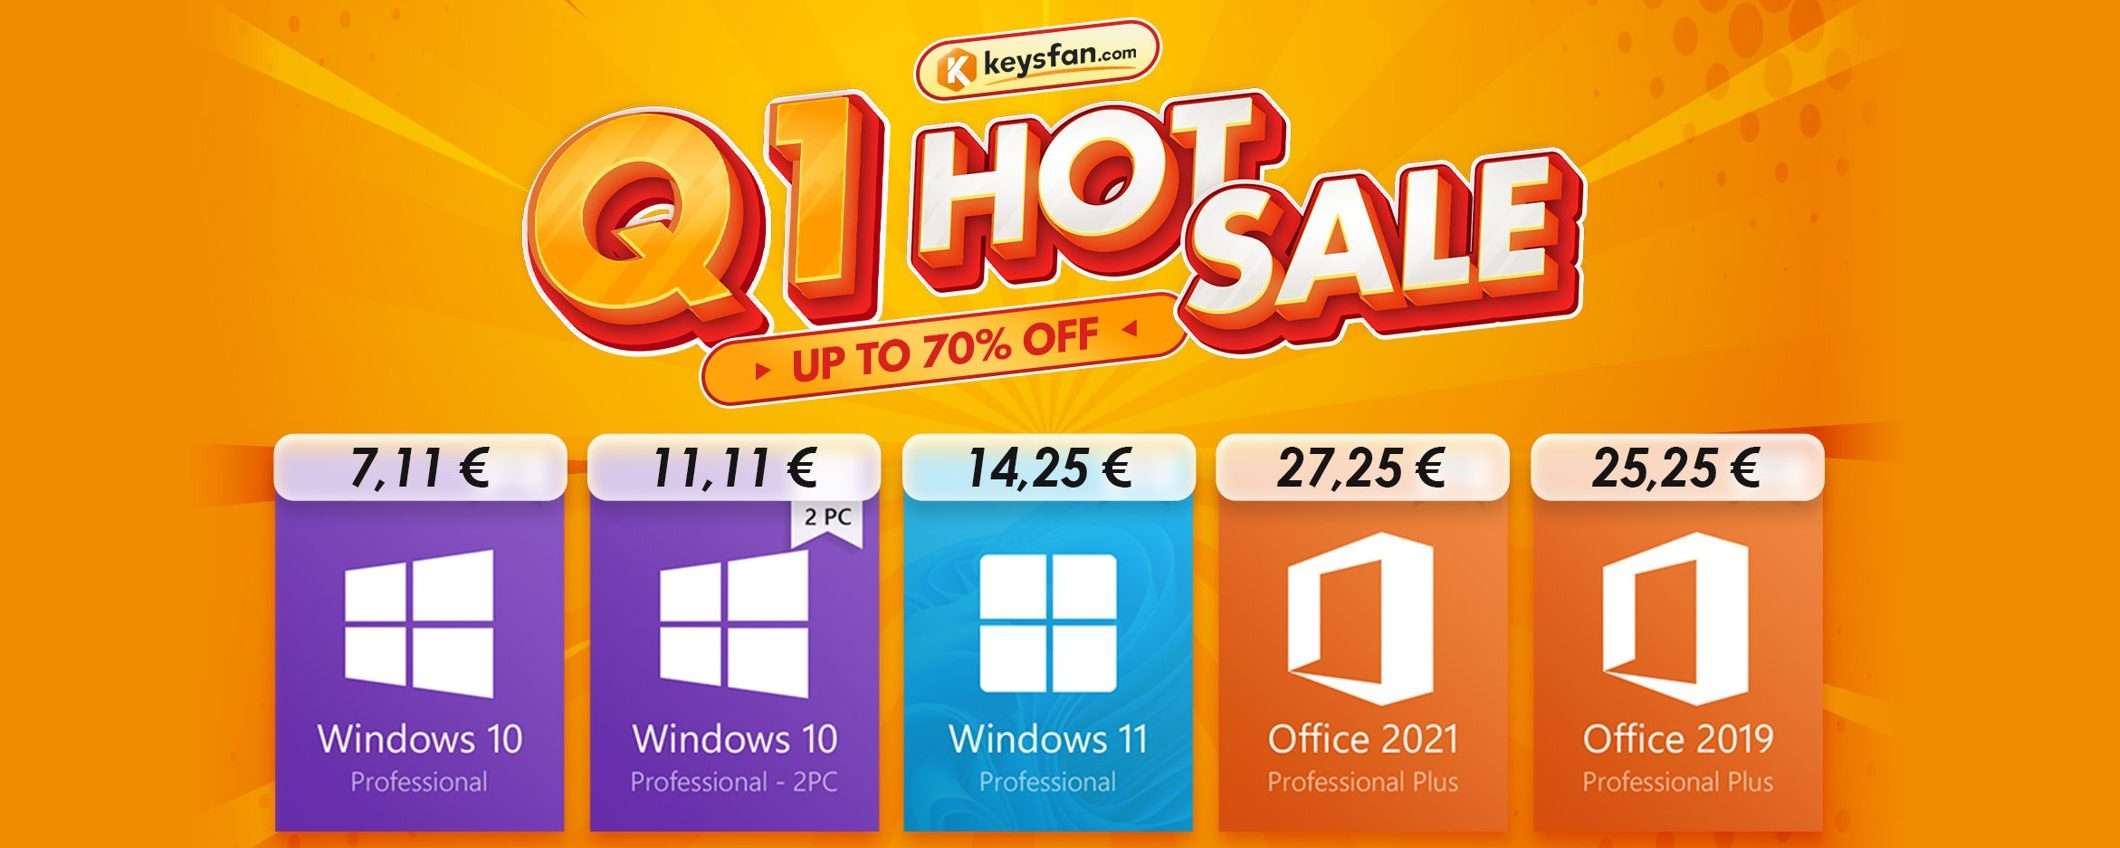 Sconti HOT su Keysfan: Windows 7,25€, -62% su altri software Microsoft